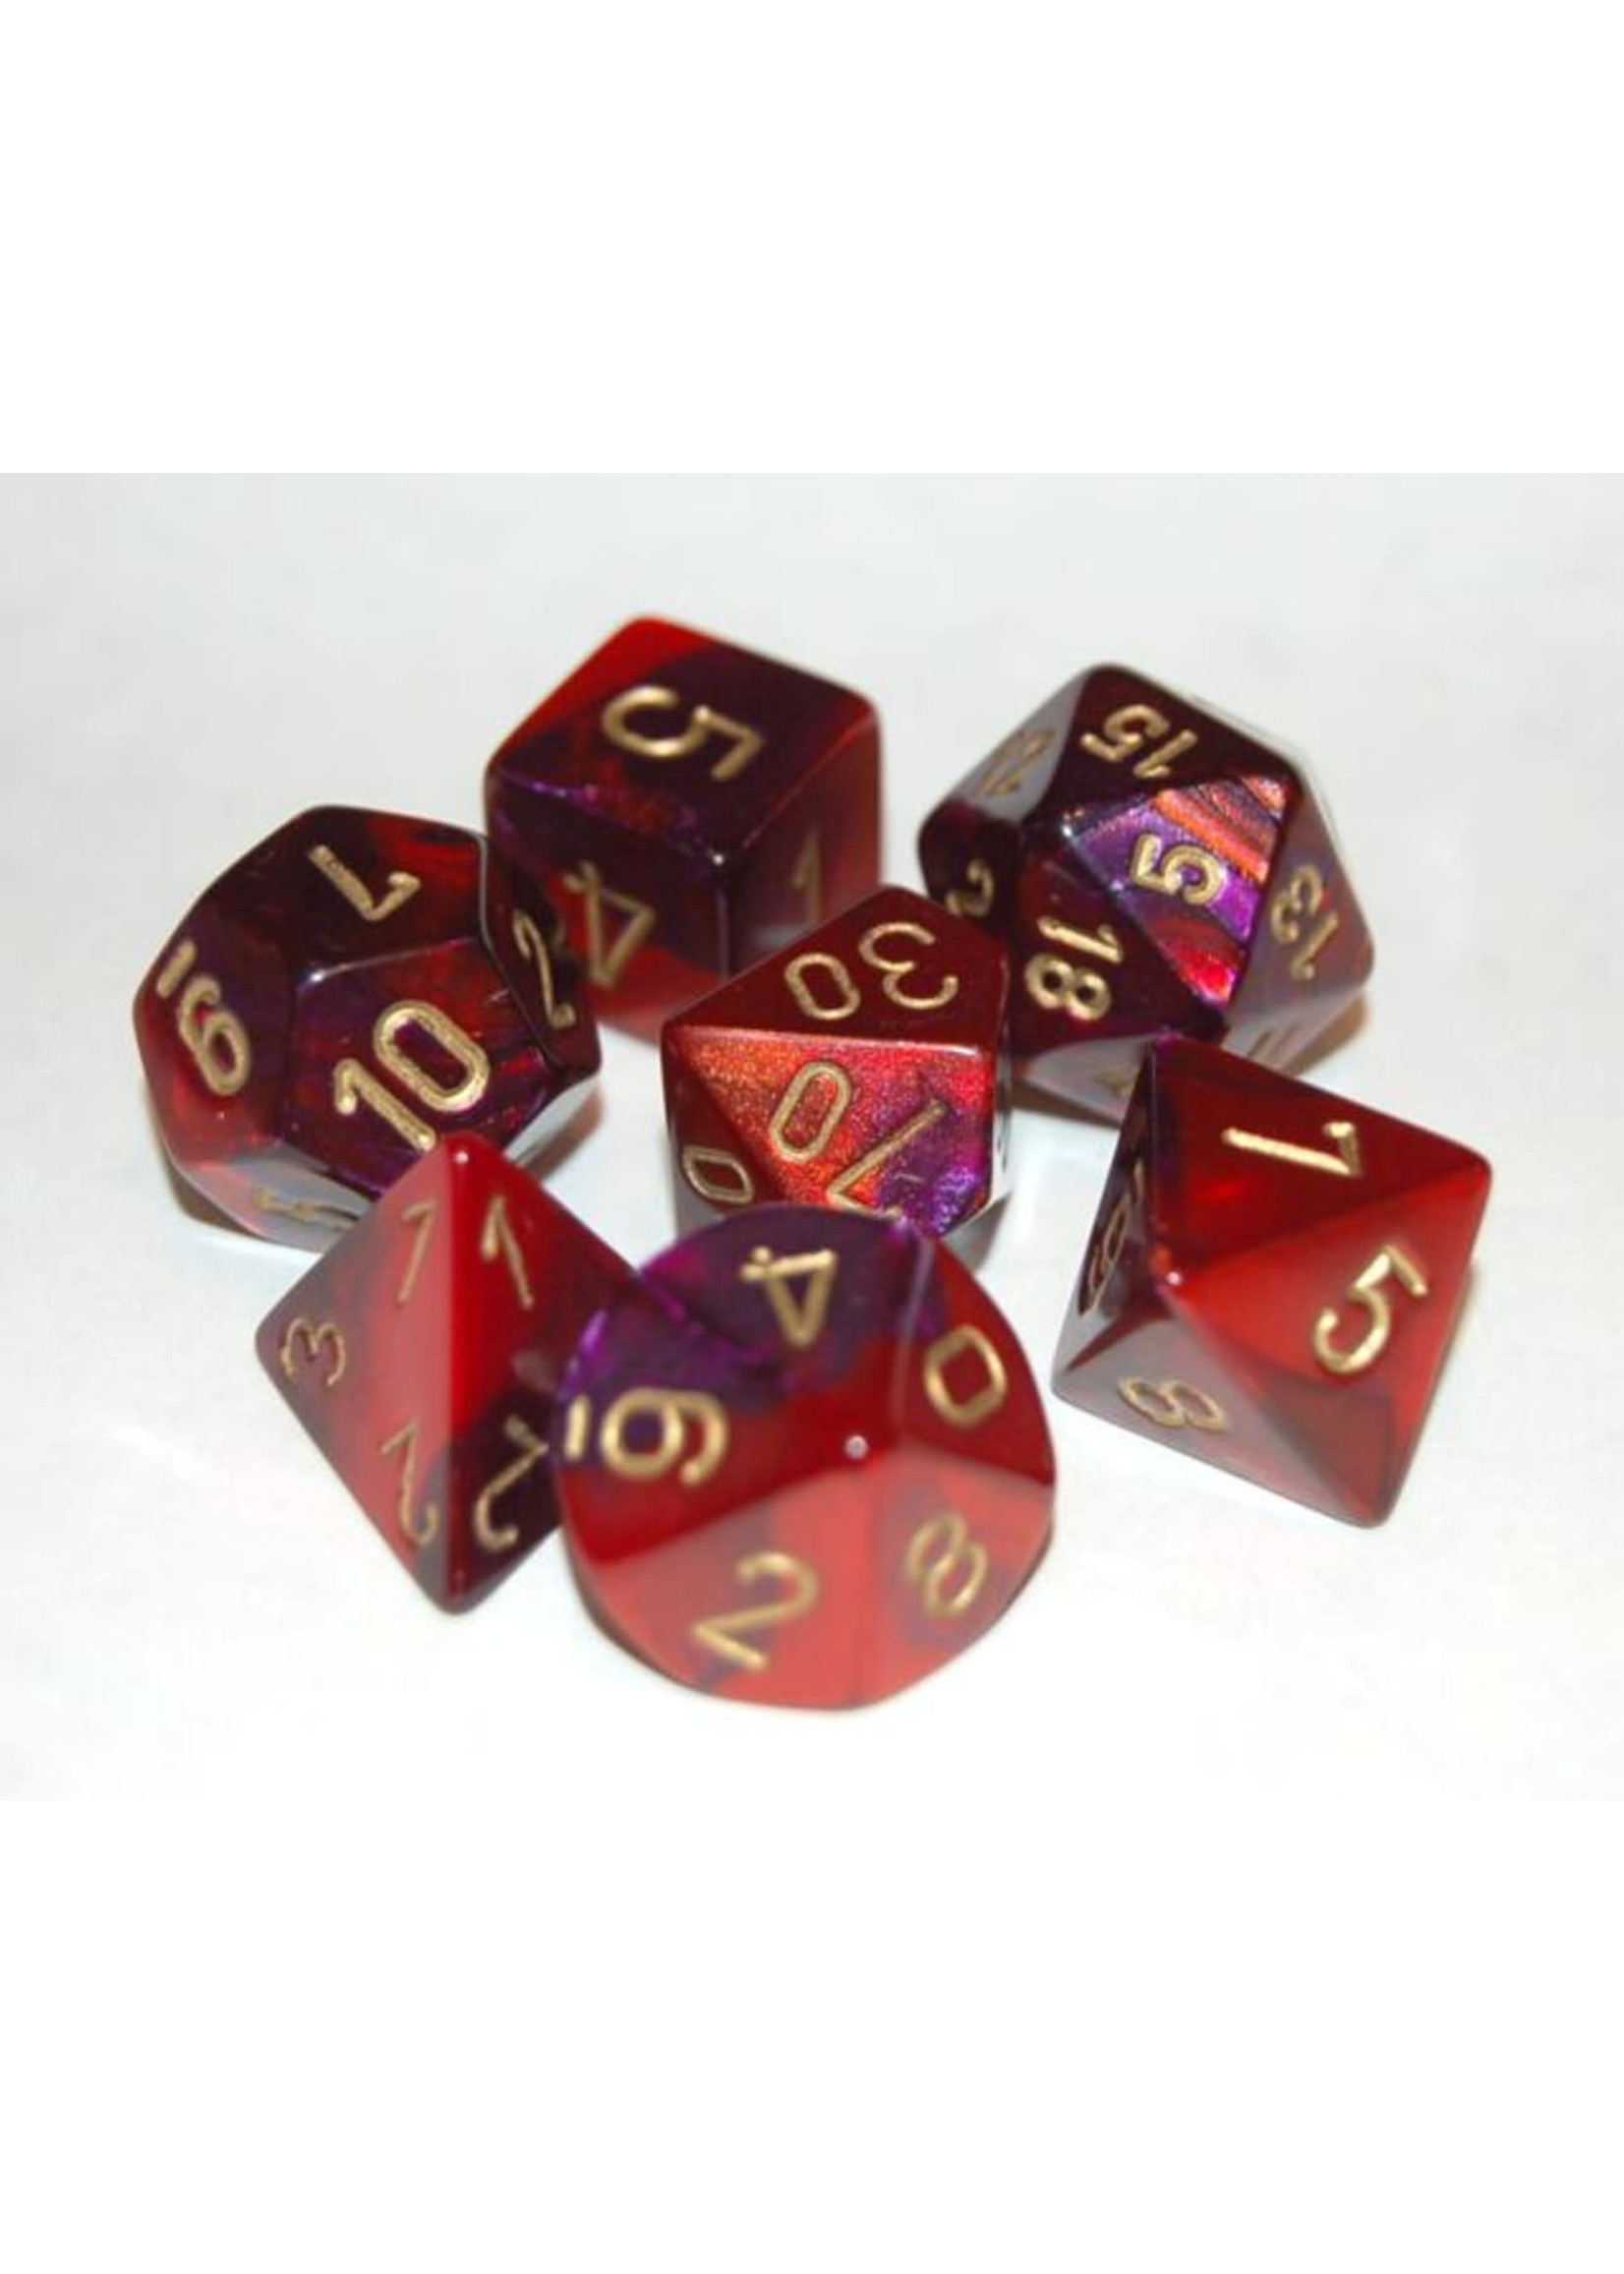 Chessex Gemini Mini 7 Set: Purple and Red w/ gold